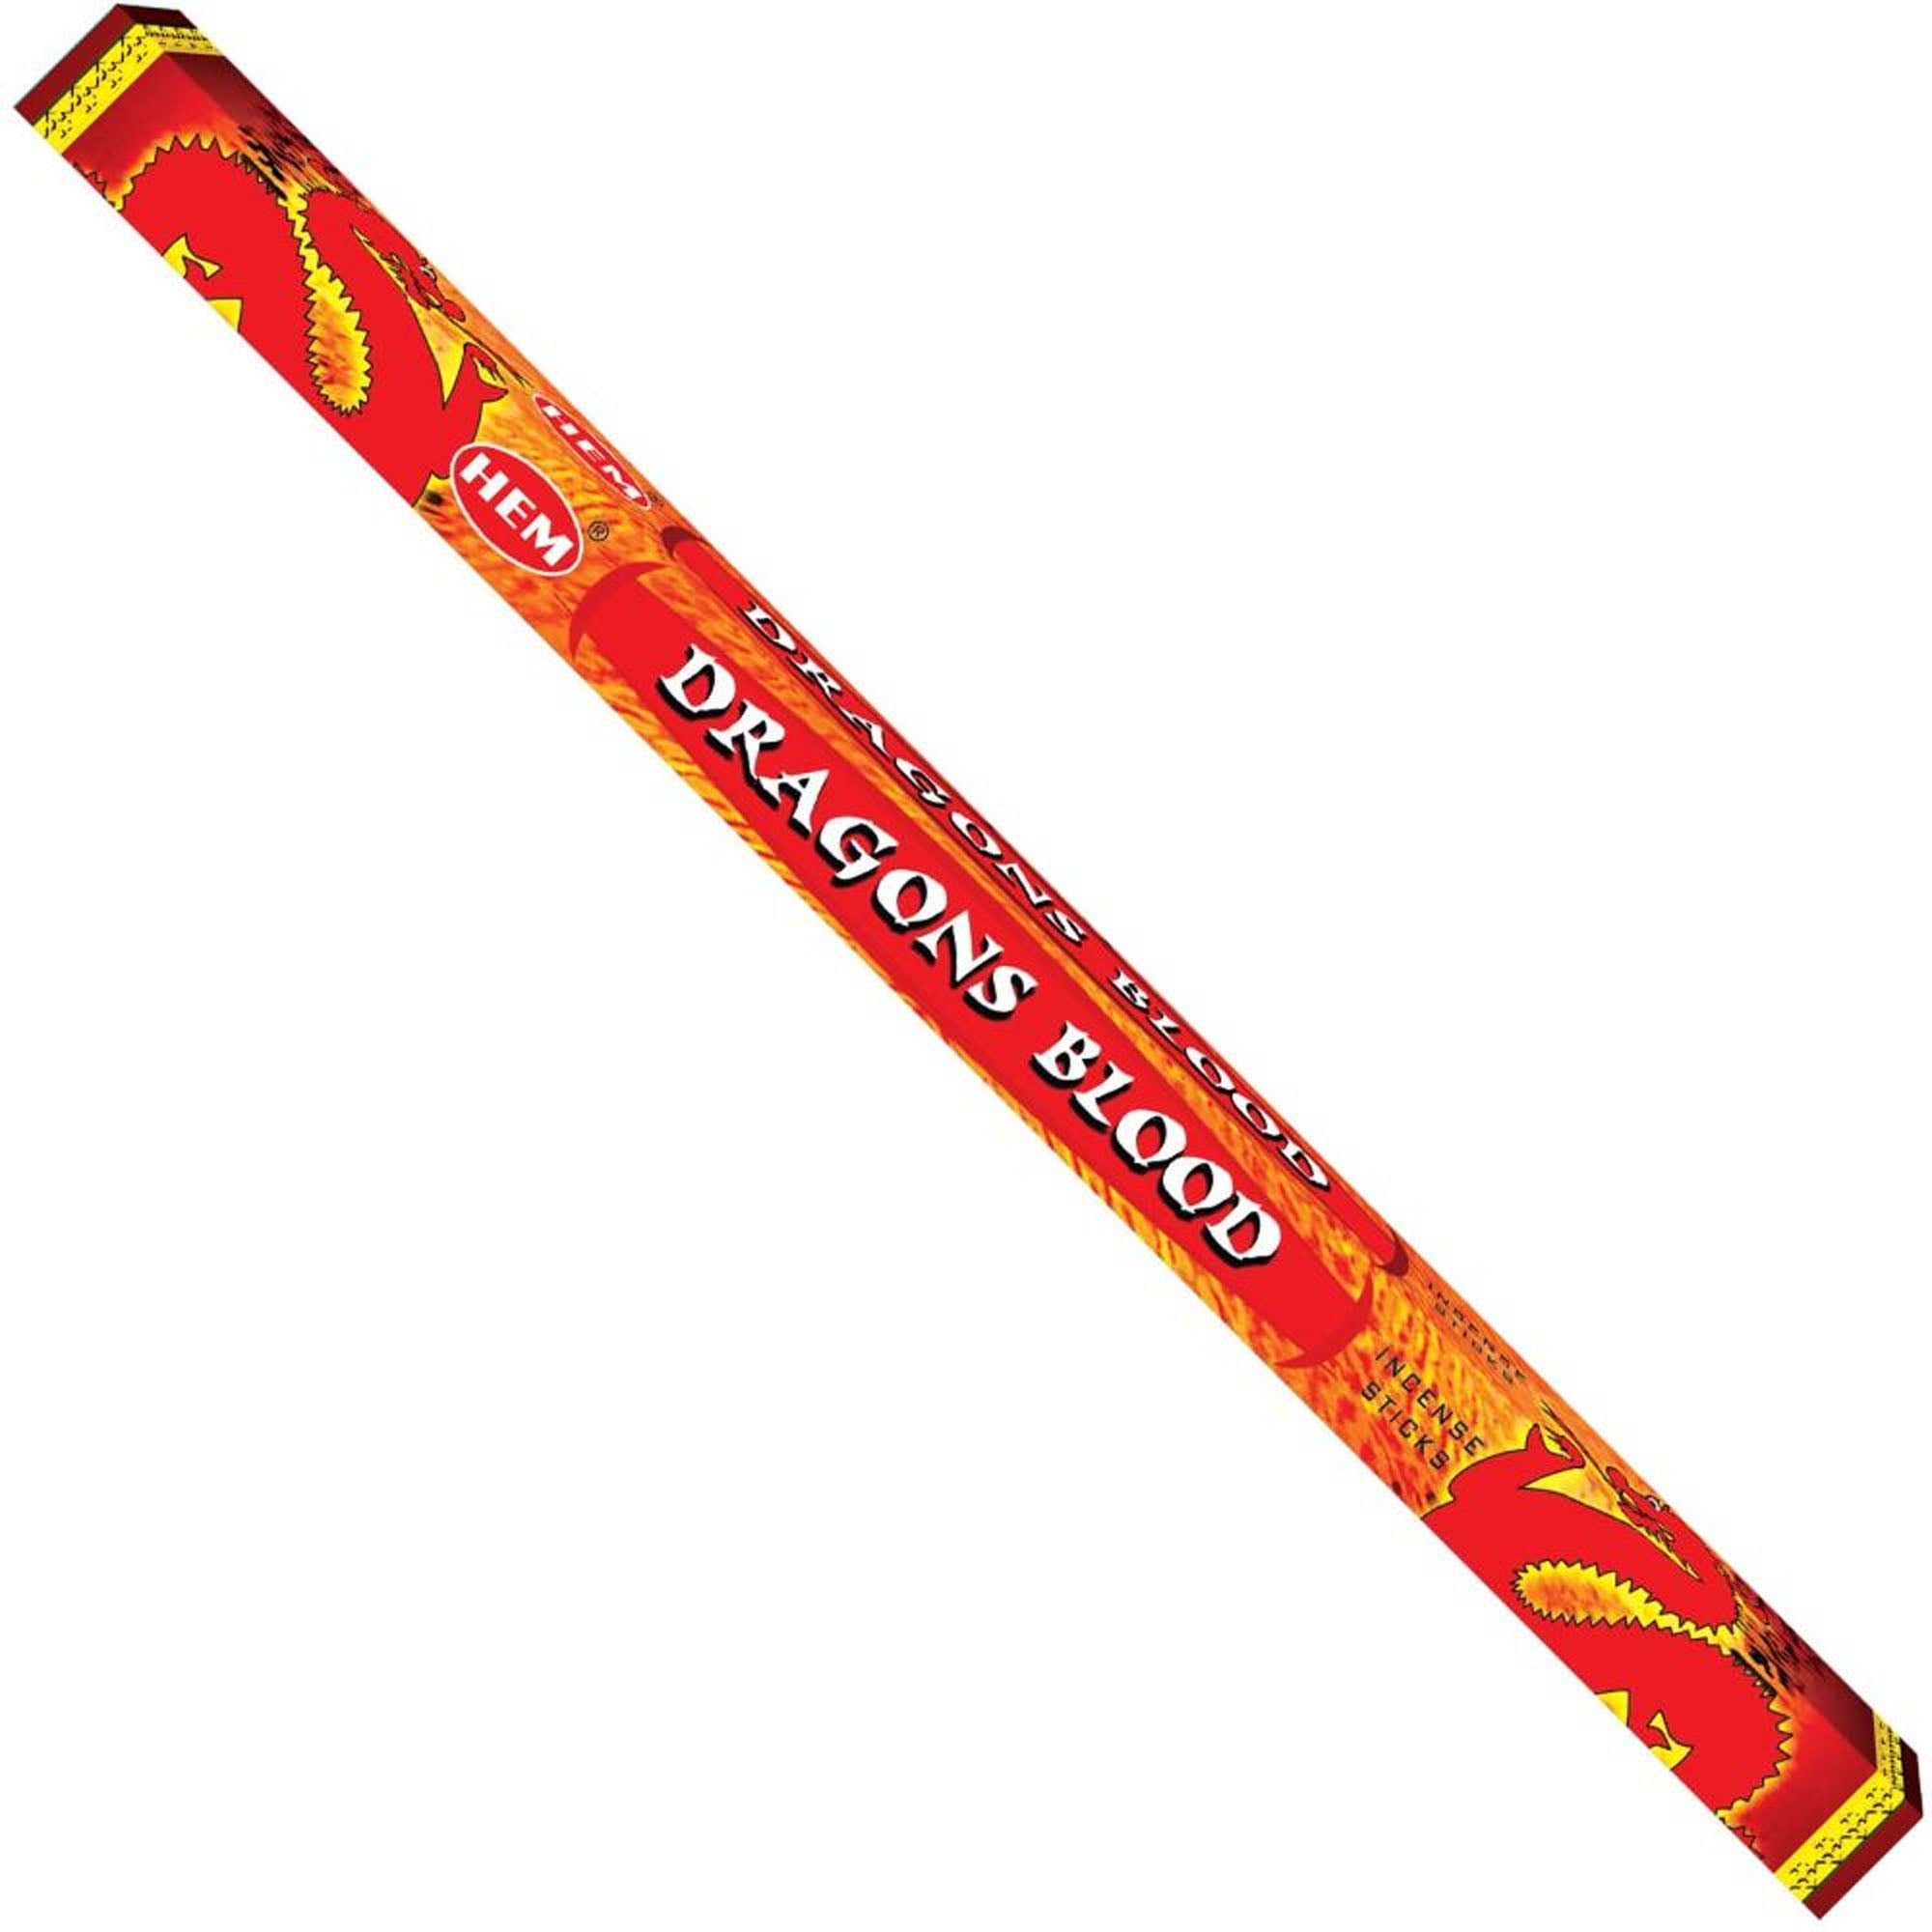 Hem - Square - Dragon's Blood Incense Sticks